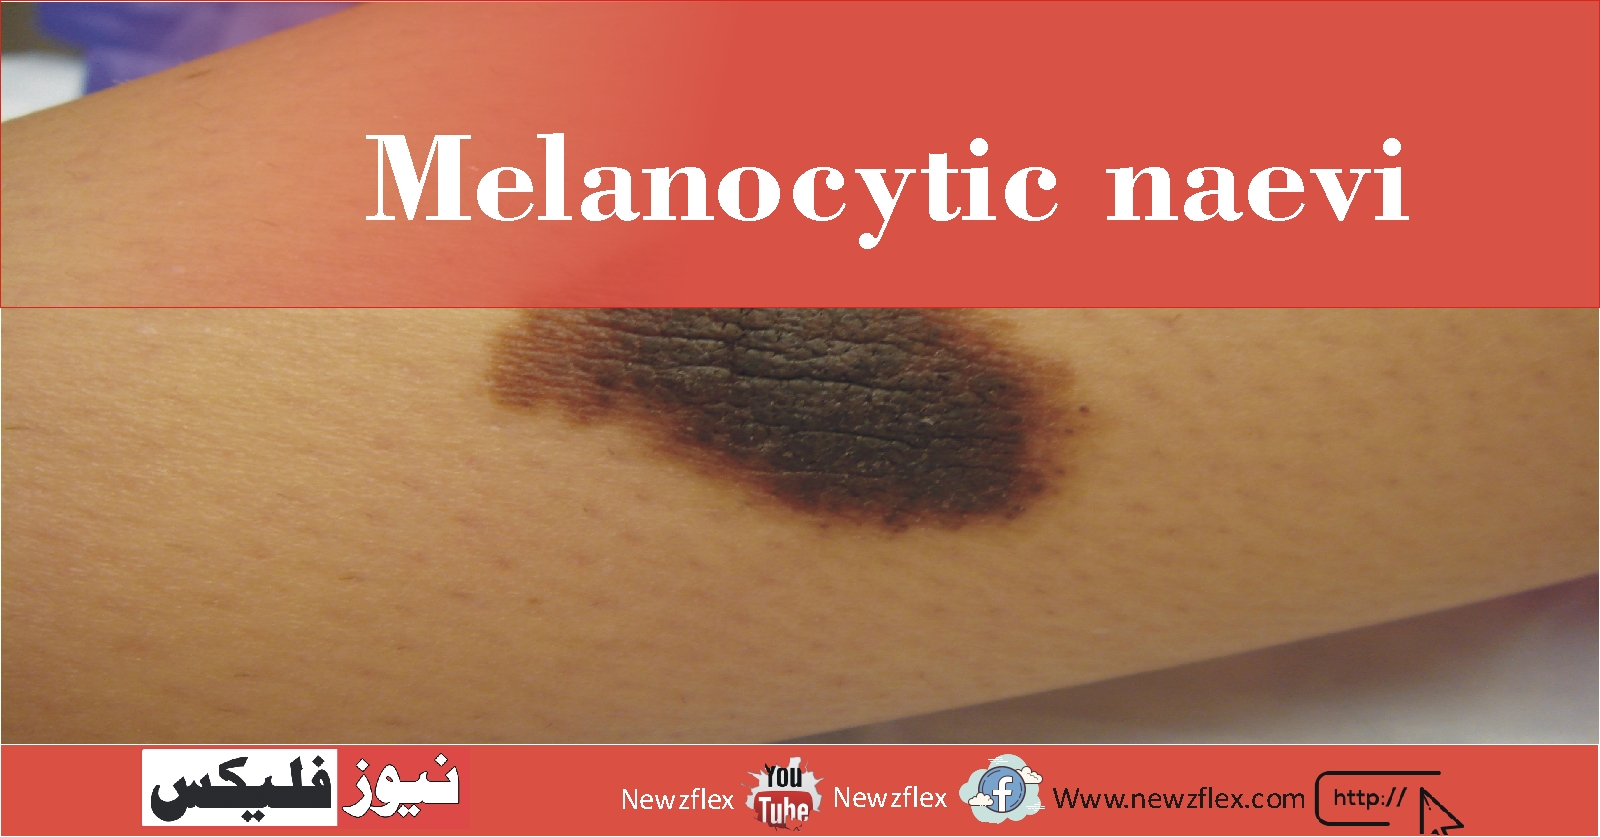 Melanocytic naevi